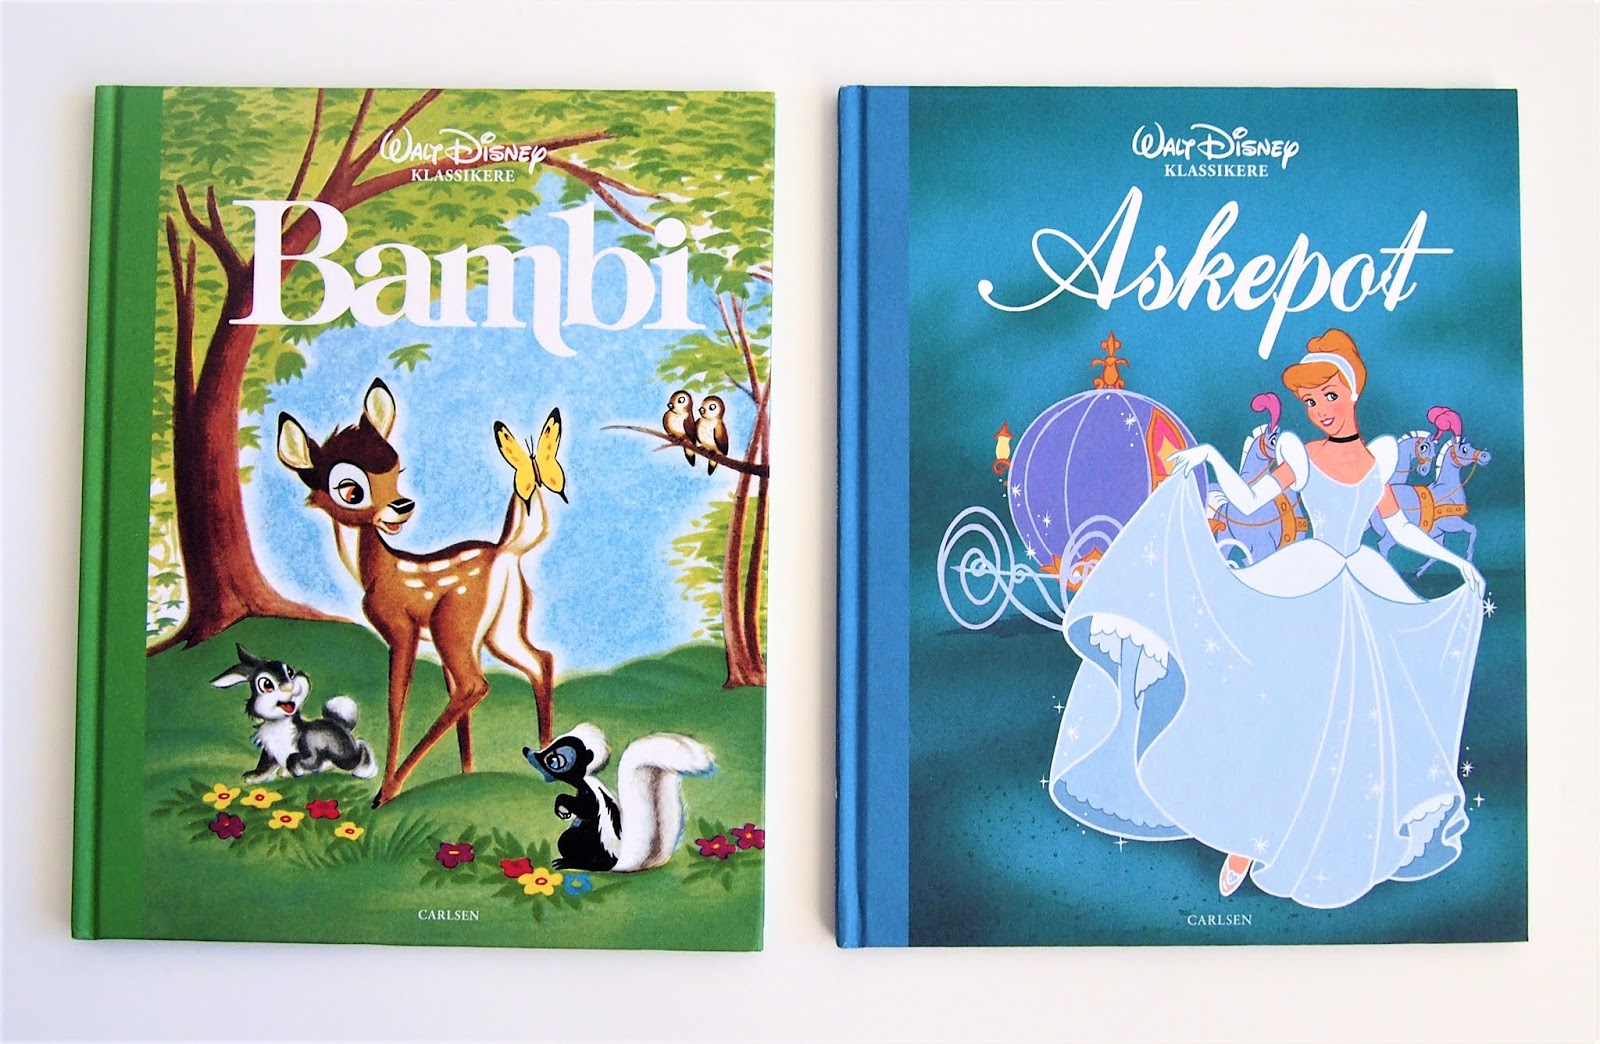 Adventures of a booknerd: "Walt Disney Klassikere BAMBI ASKEPOT" af Disney Studio